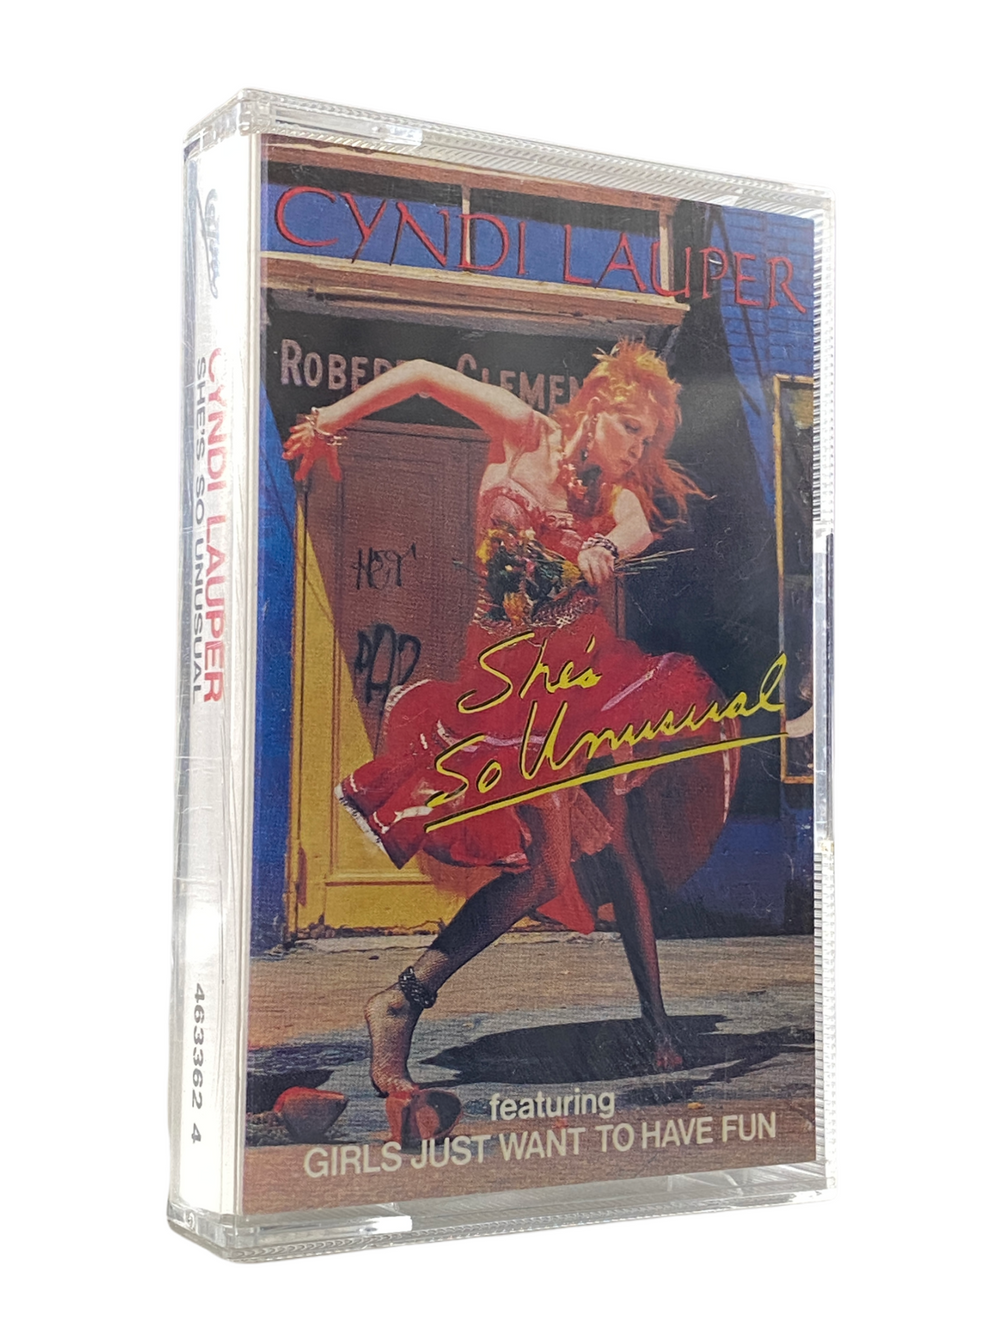 Prince – Cyndi Lauper She's So Unusual Original Cassette Tape UK 1983 Release Prince